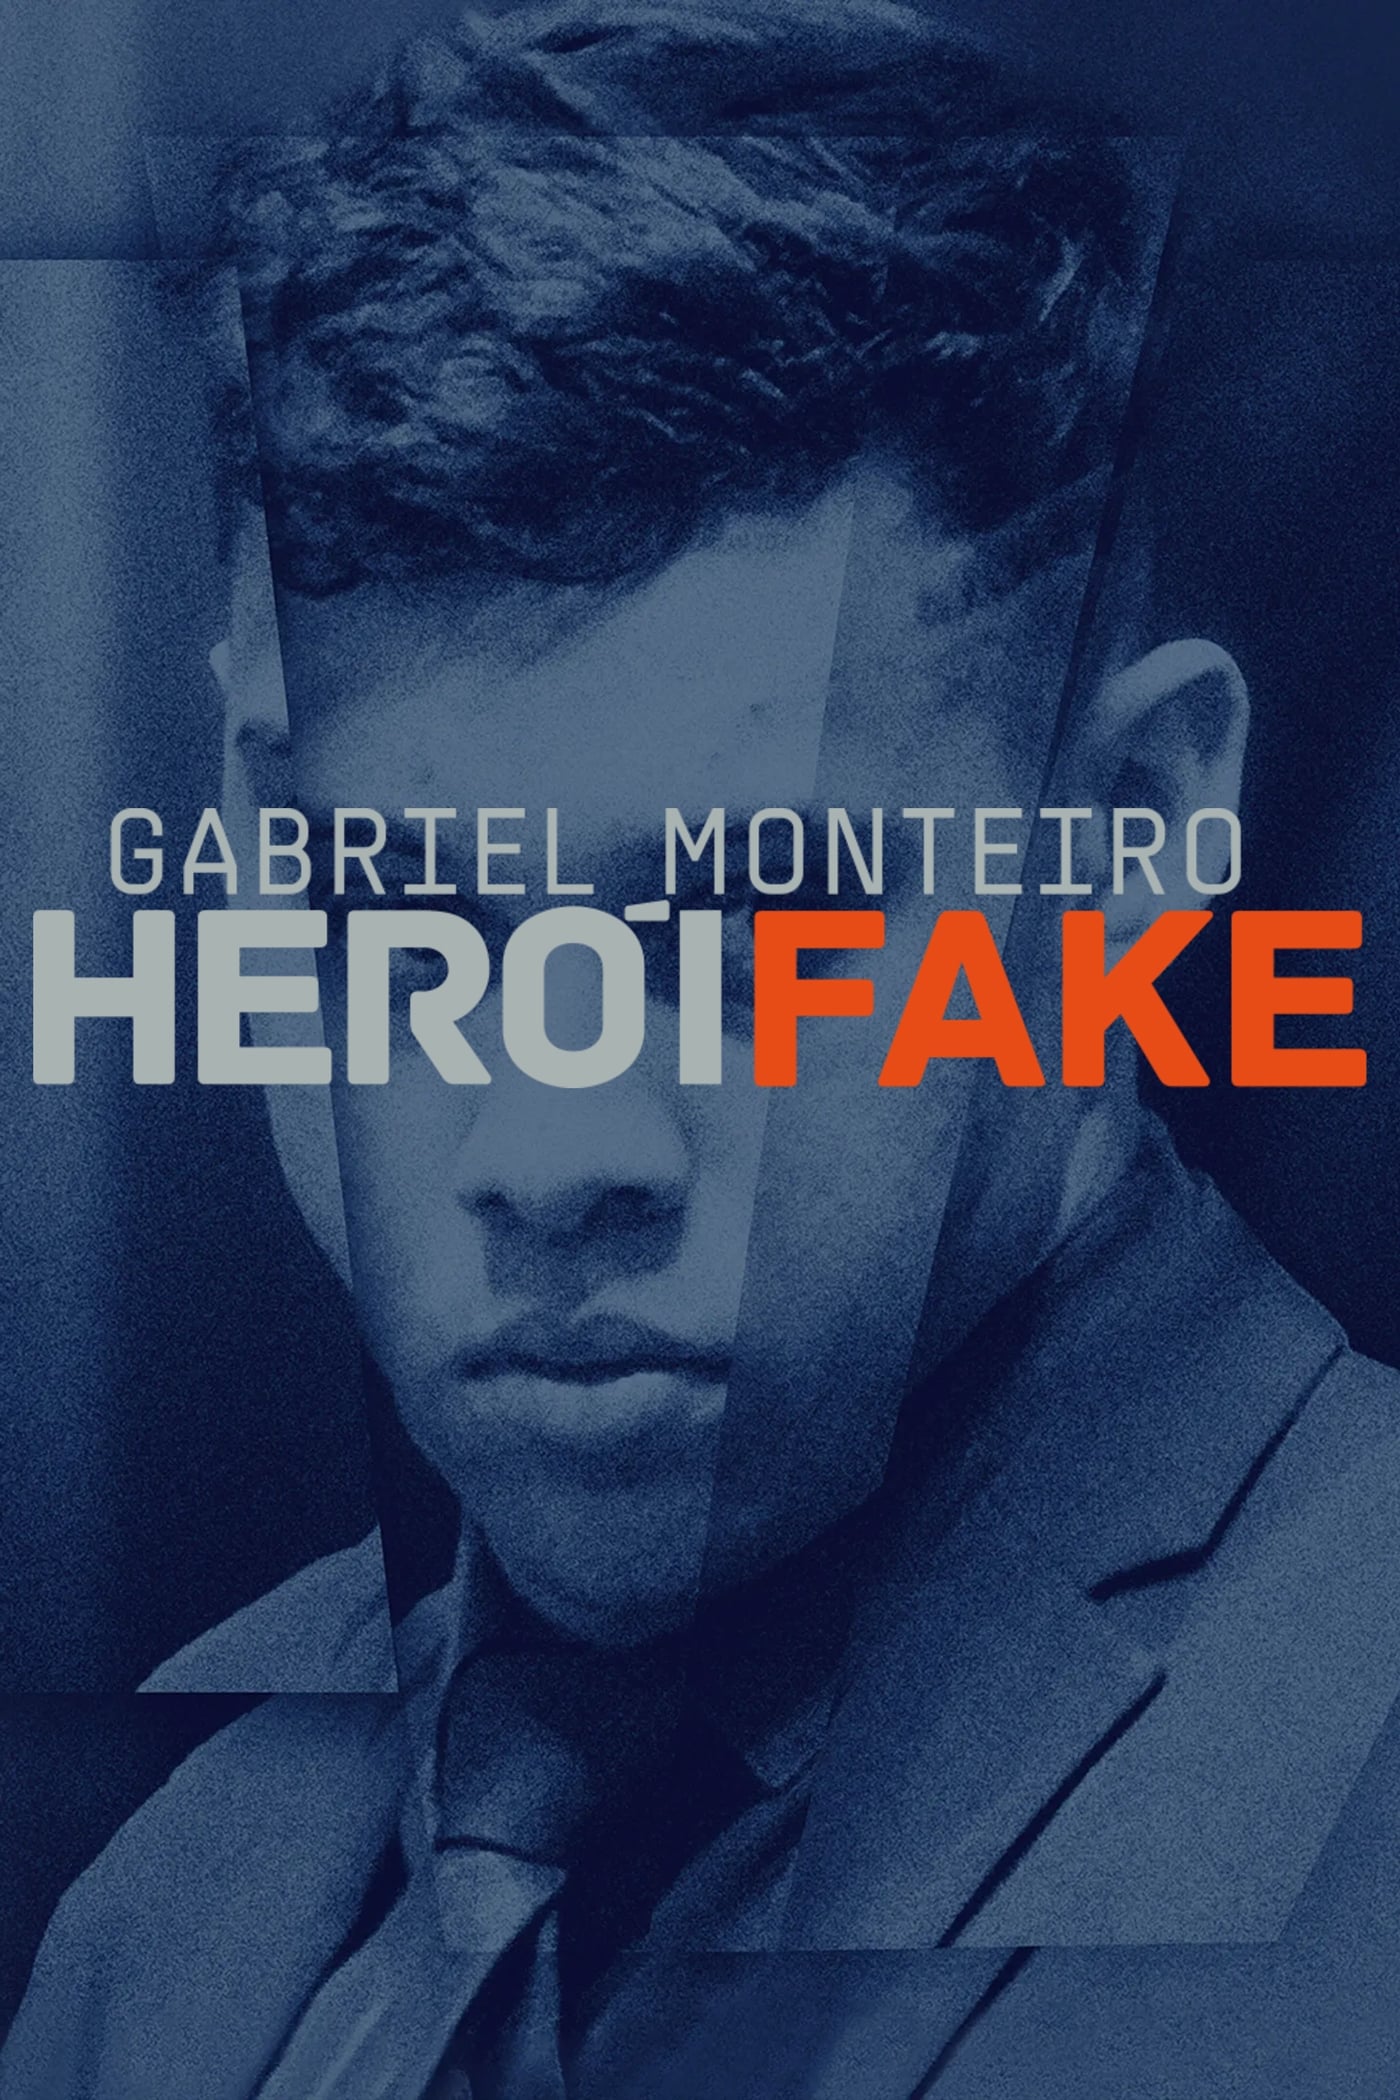 TV ratings for Gabriel Monteiro – Fake Hero (Gabriel Monteiro – Herói Fake) in Brazil. Globoplay TV series